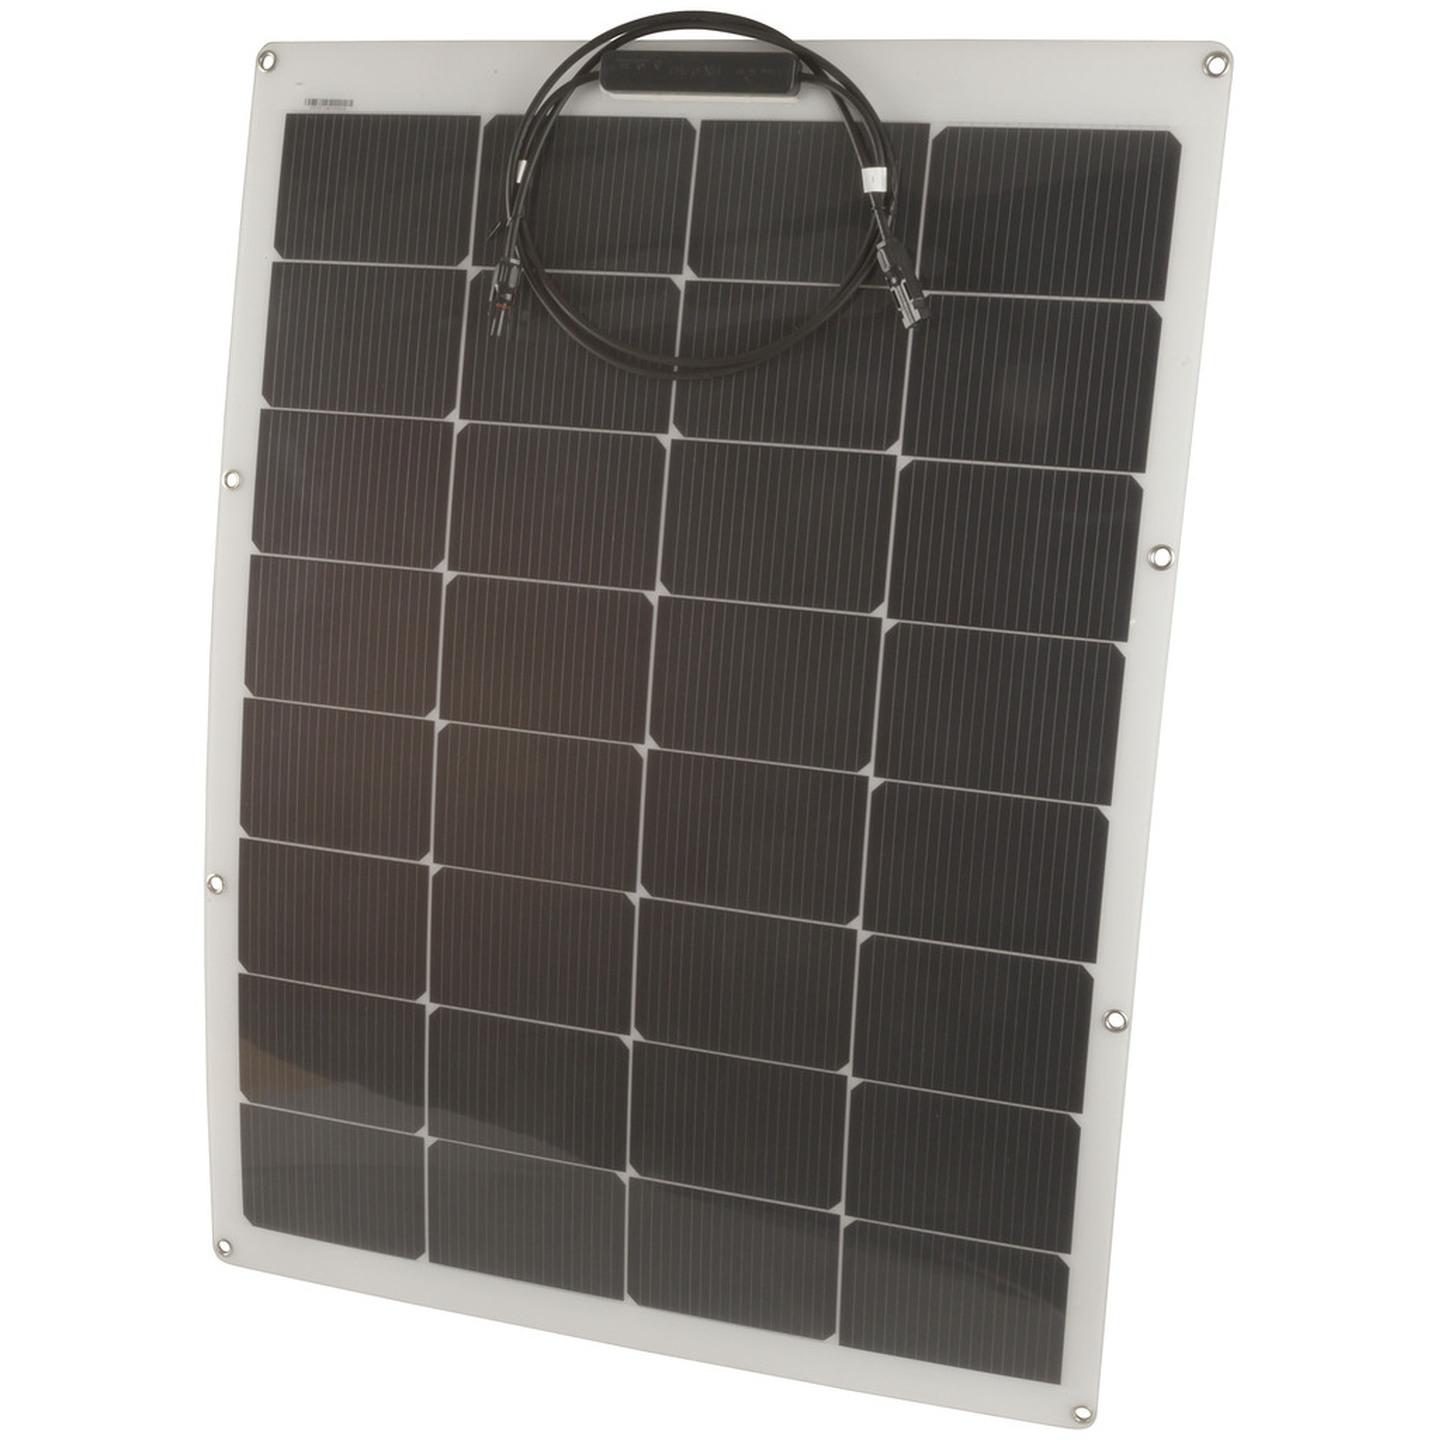 100W 12V Semi Flexible Solar Panel with DF Technology